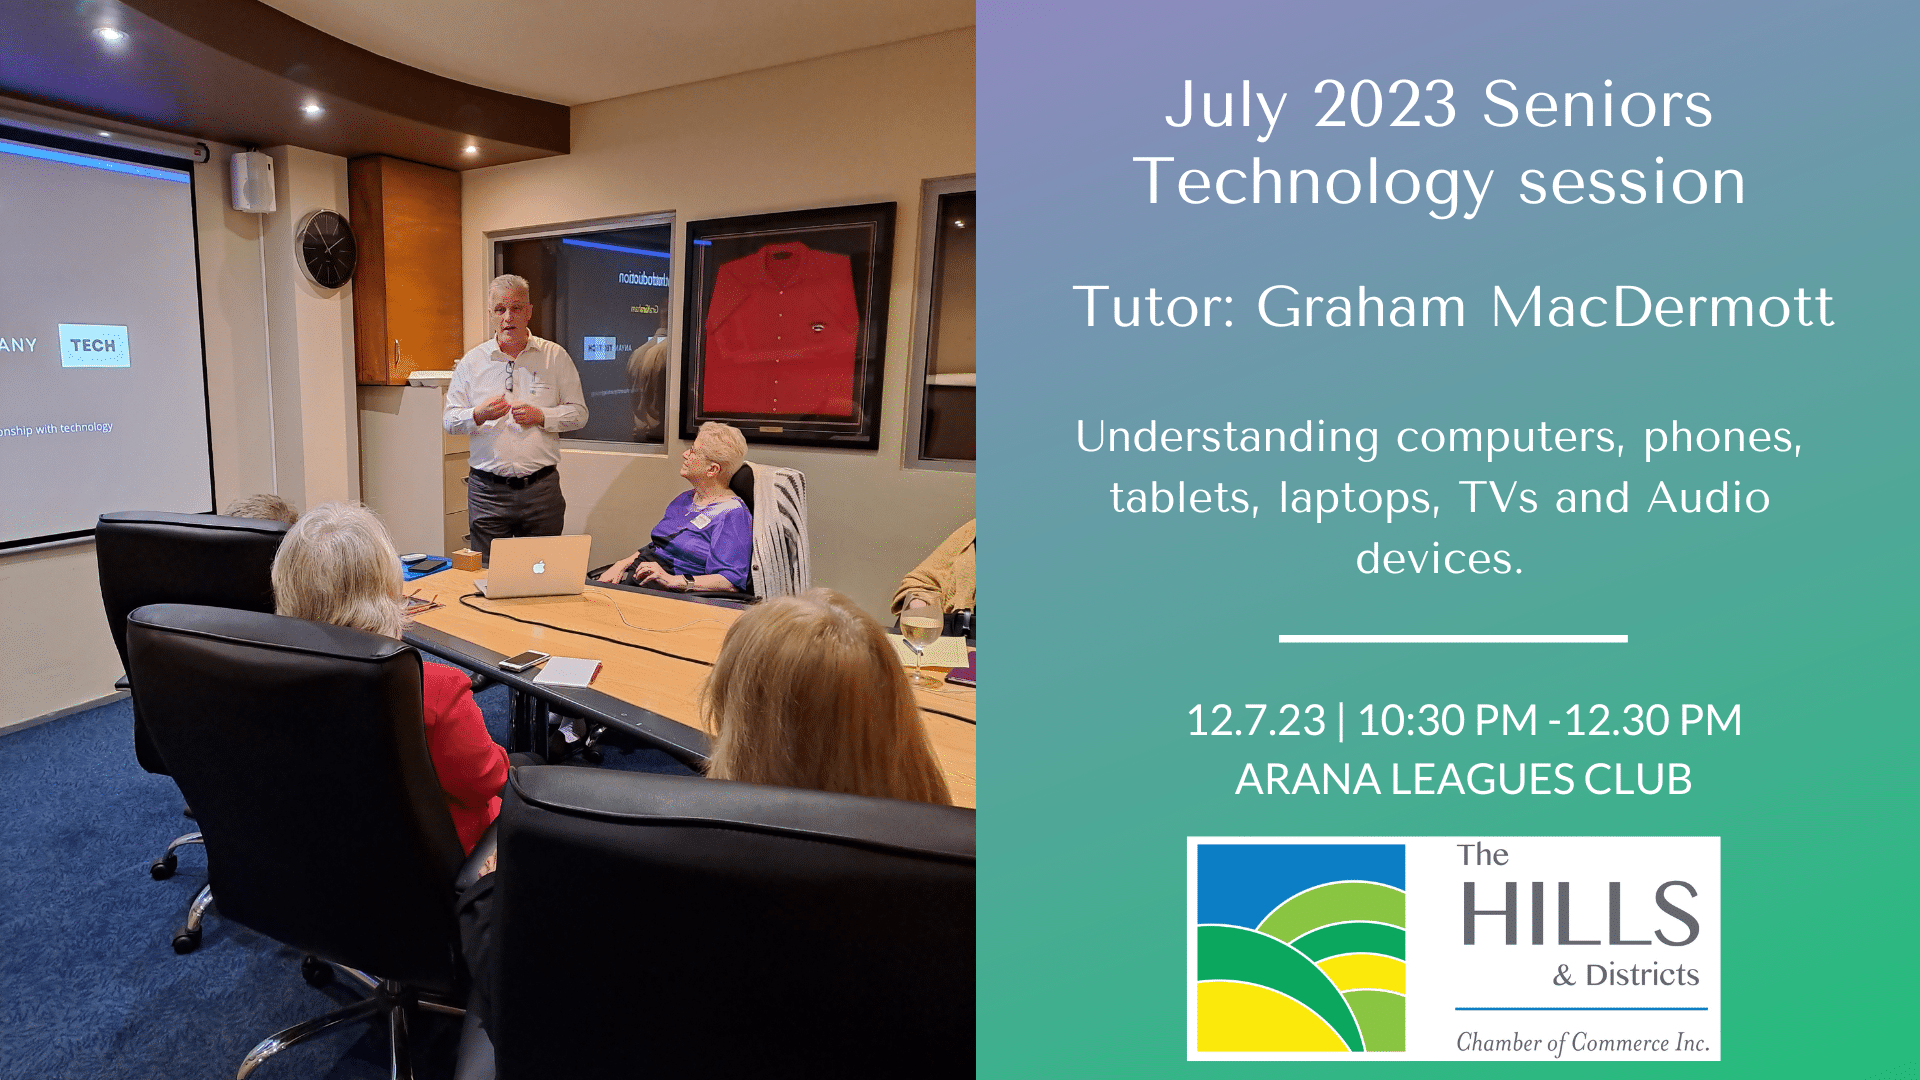 Seniors Event » July 2023 Seniors Technology Session